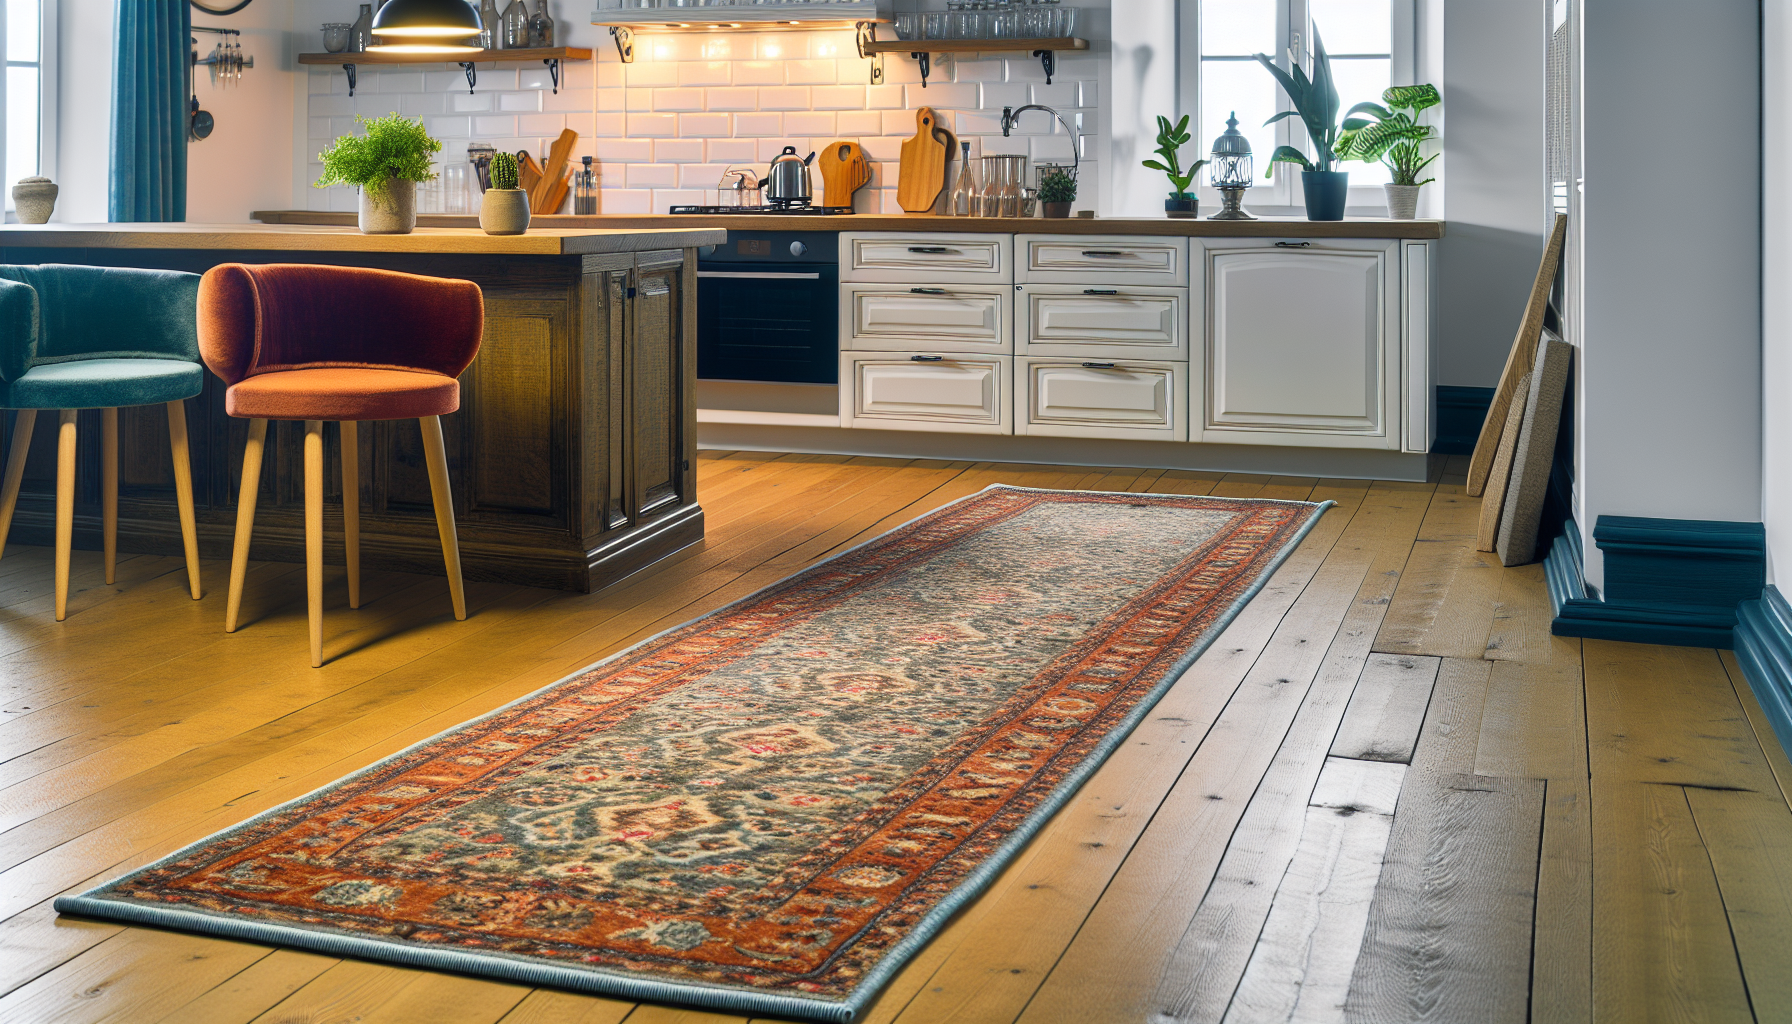 Runner rug enhancing a kitchen floor